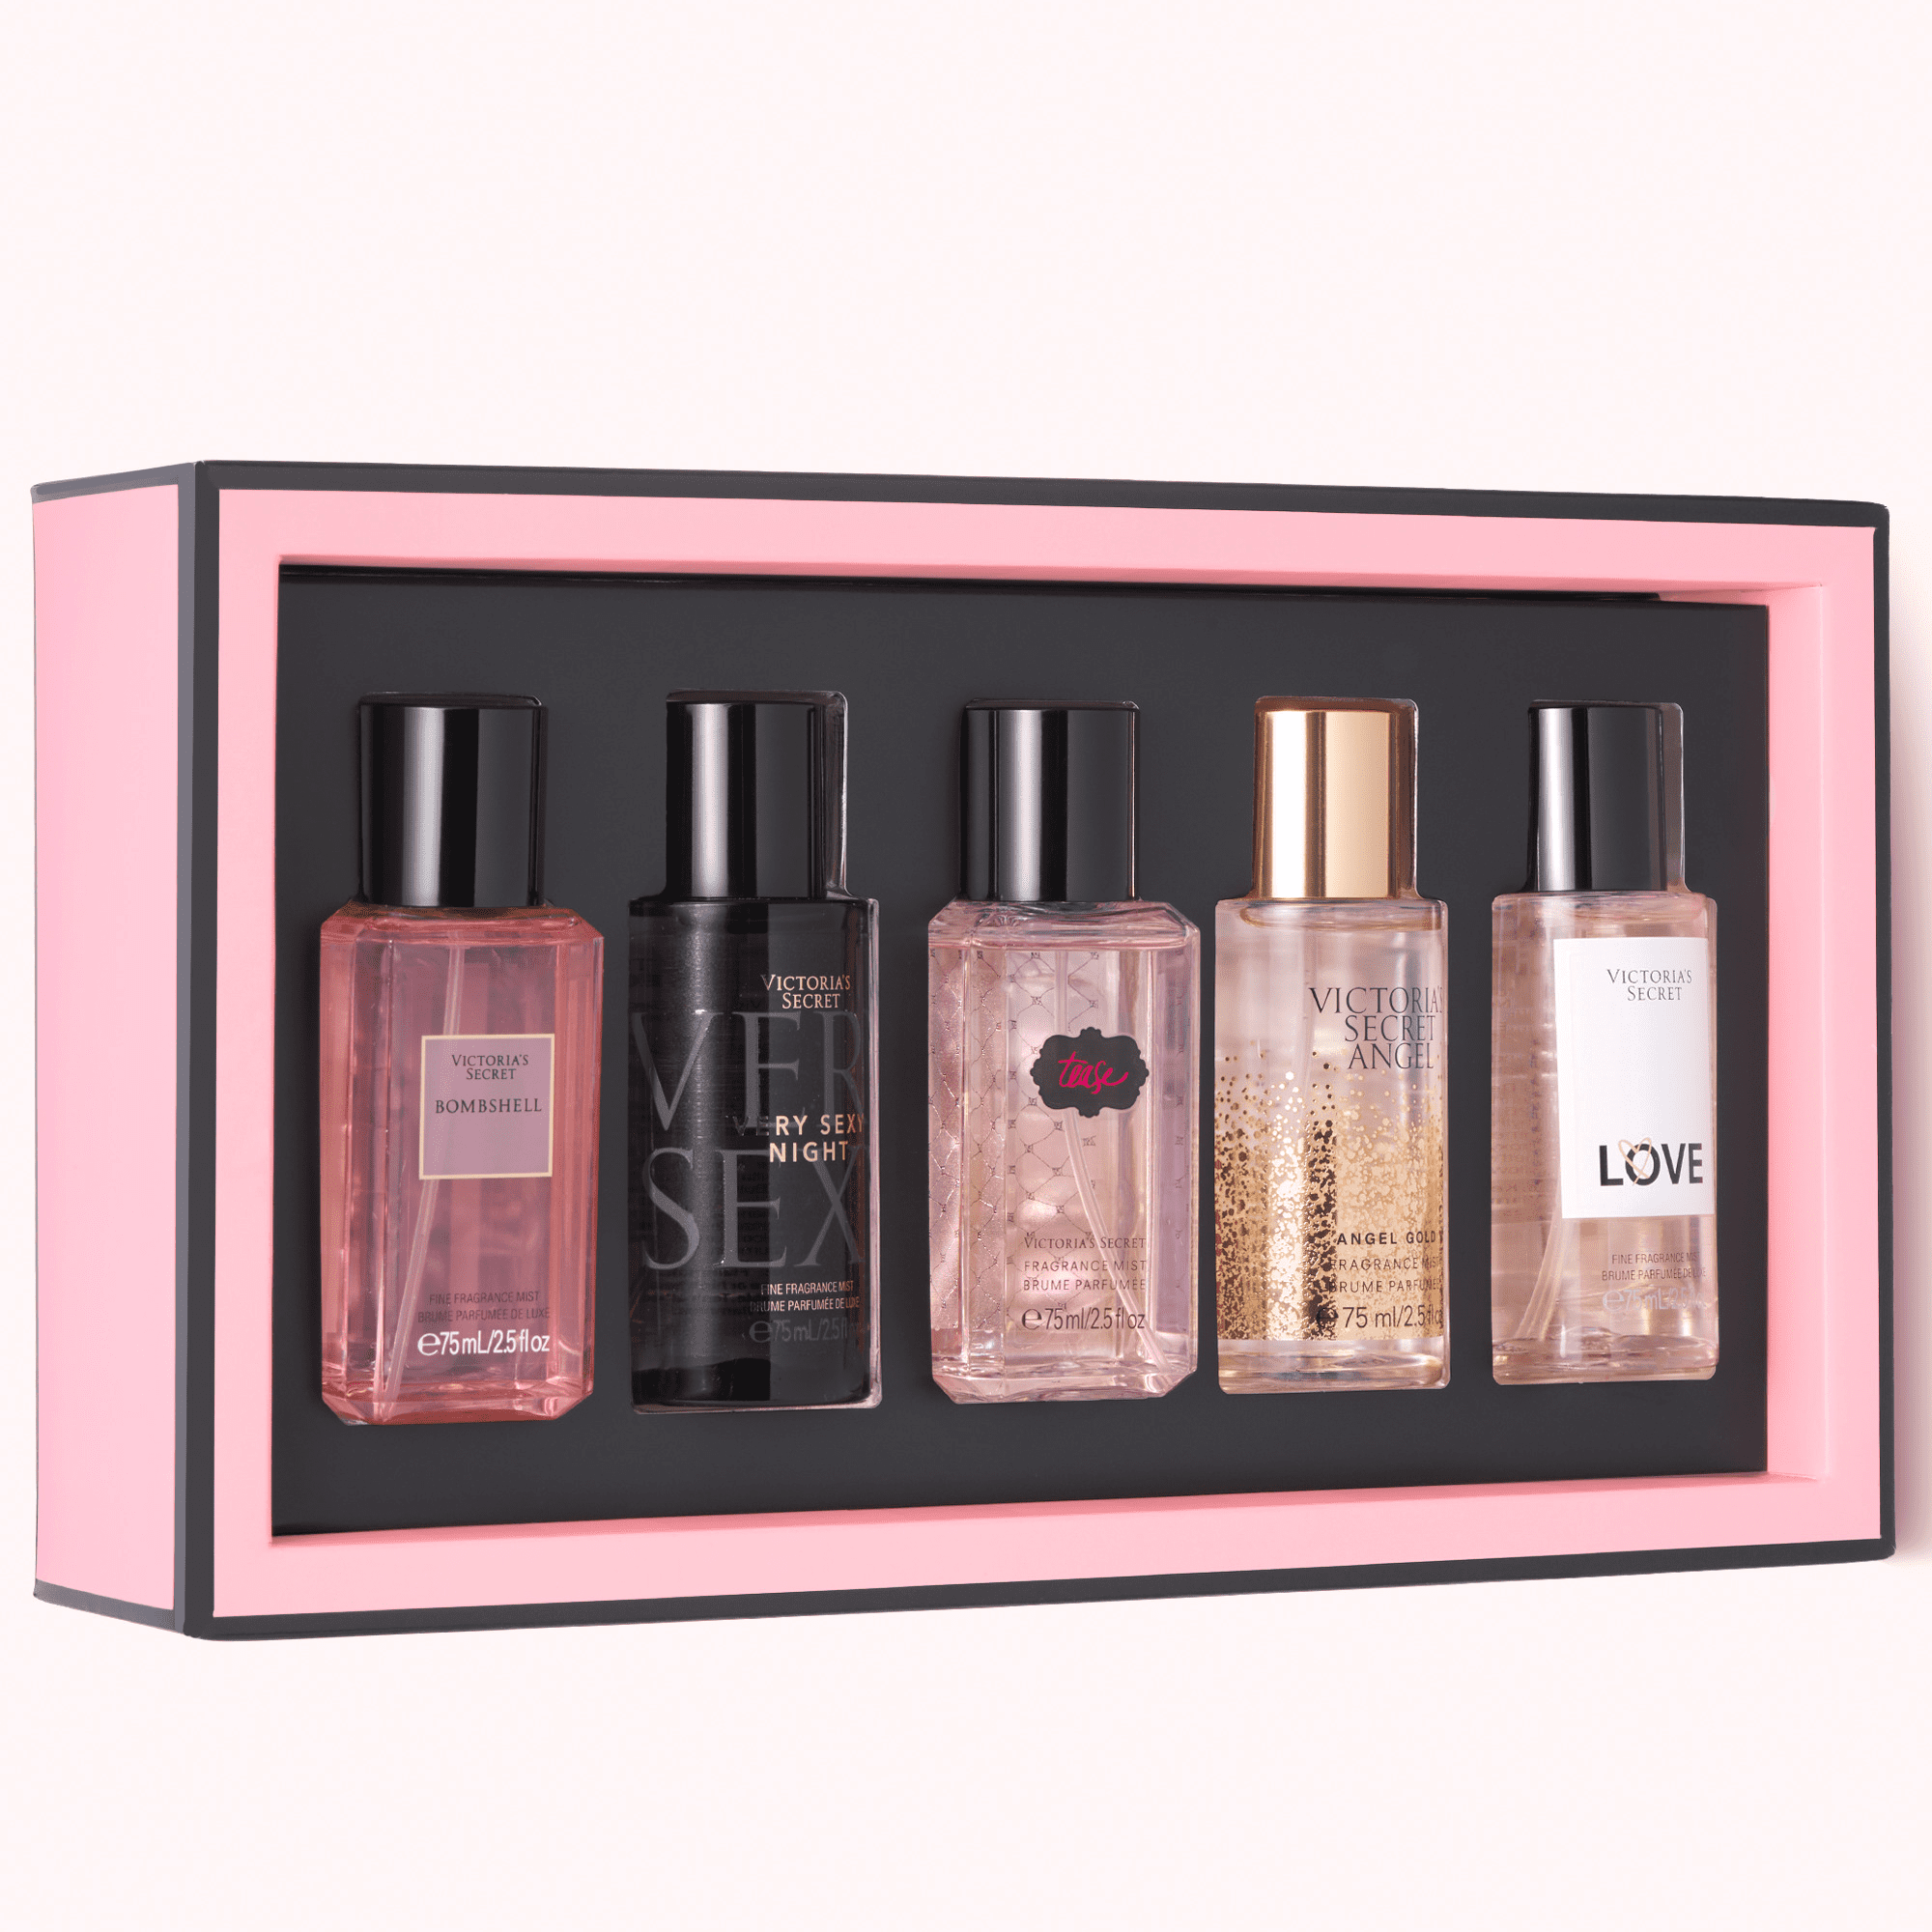 Victoria Secret BOMBSHELL Fine fragrance Mini Gift set : : Beauty